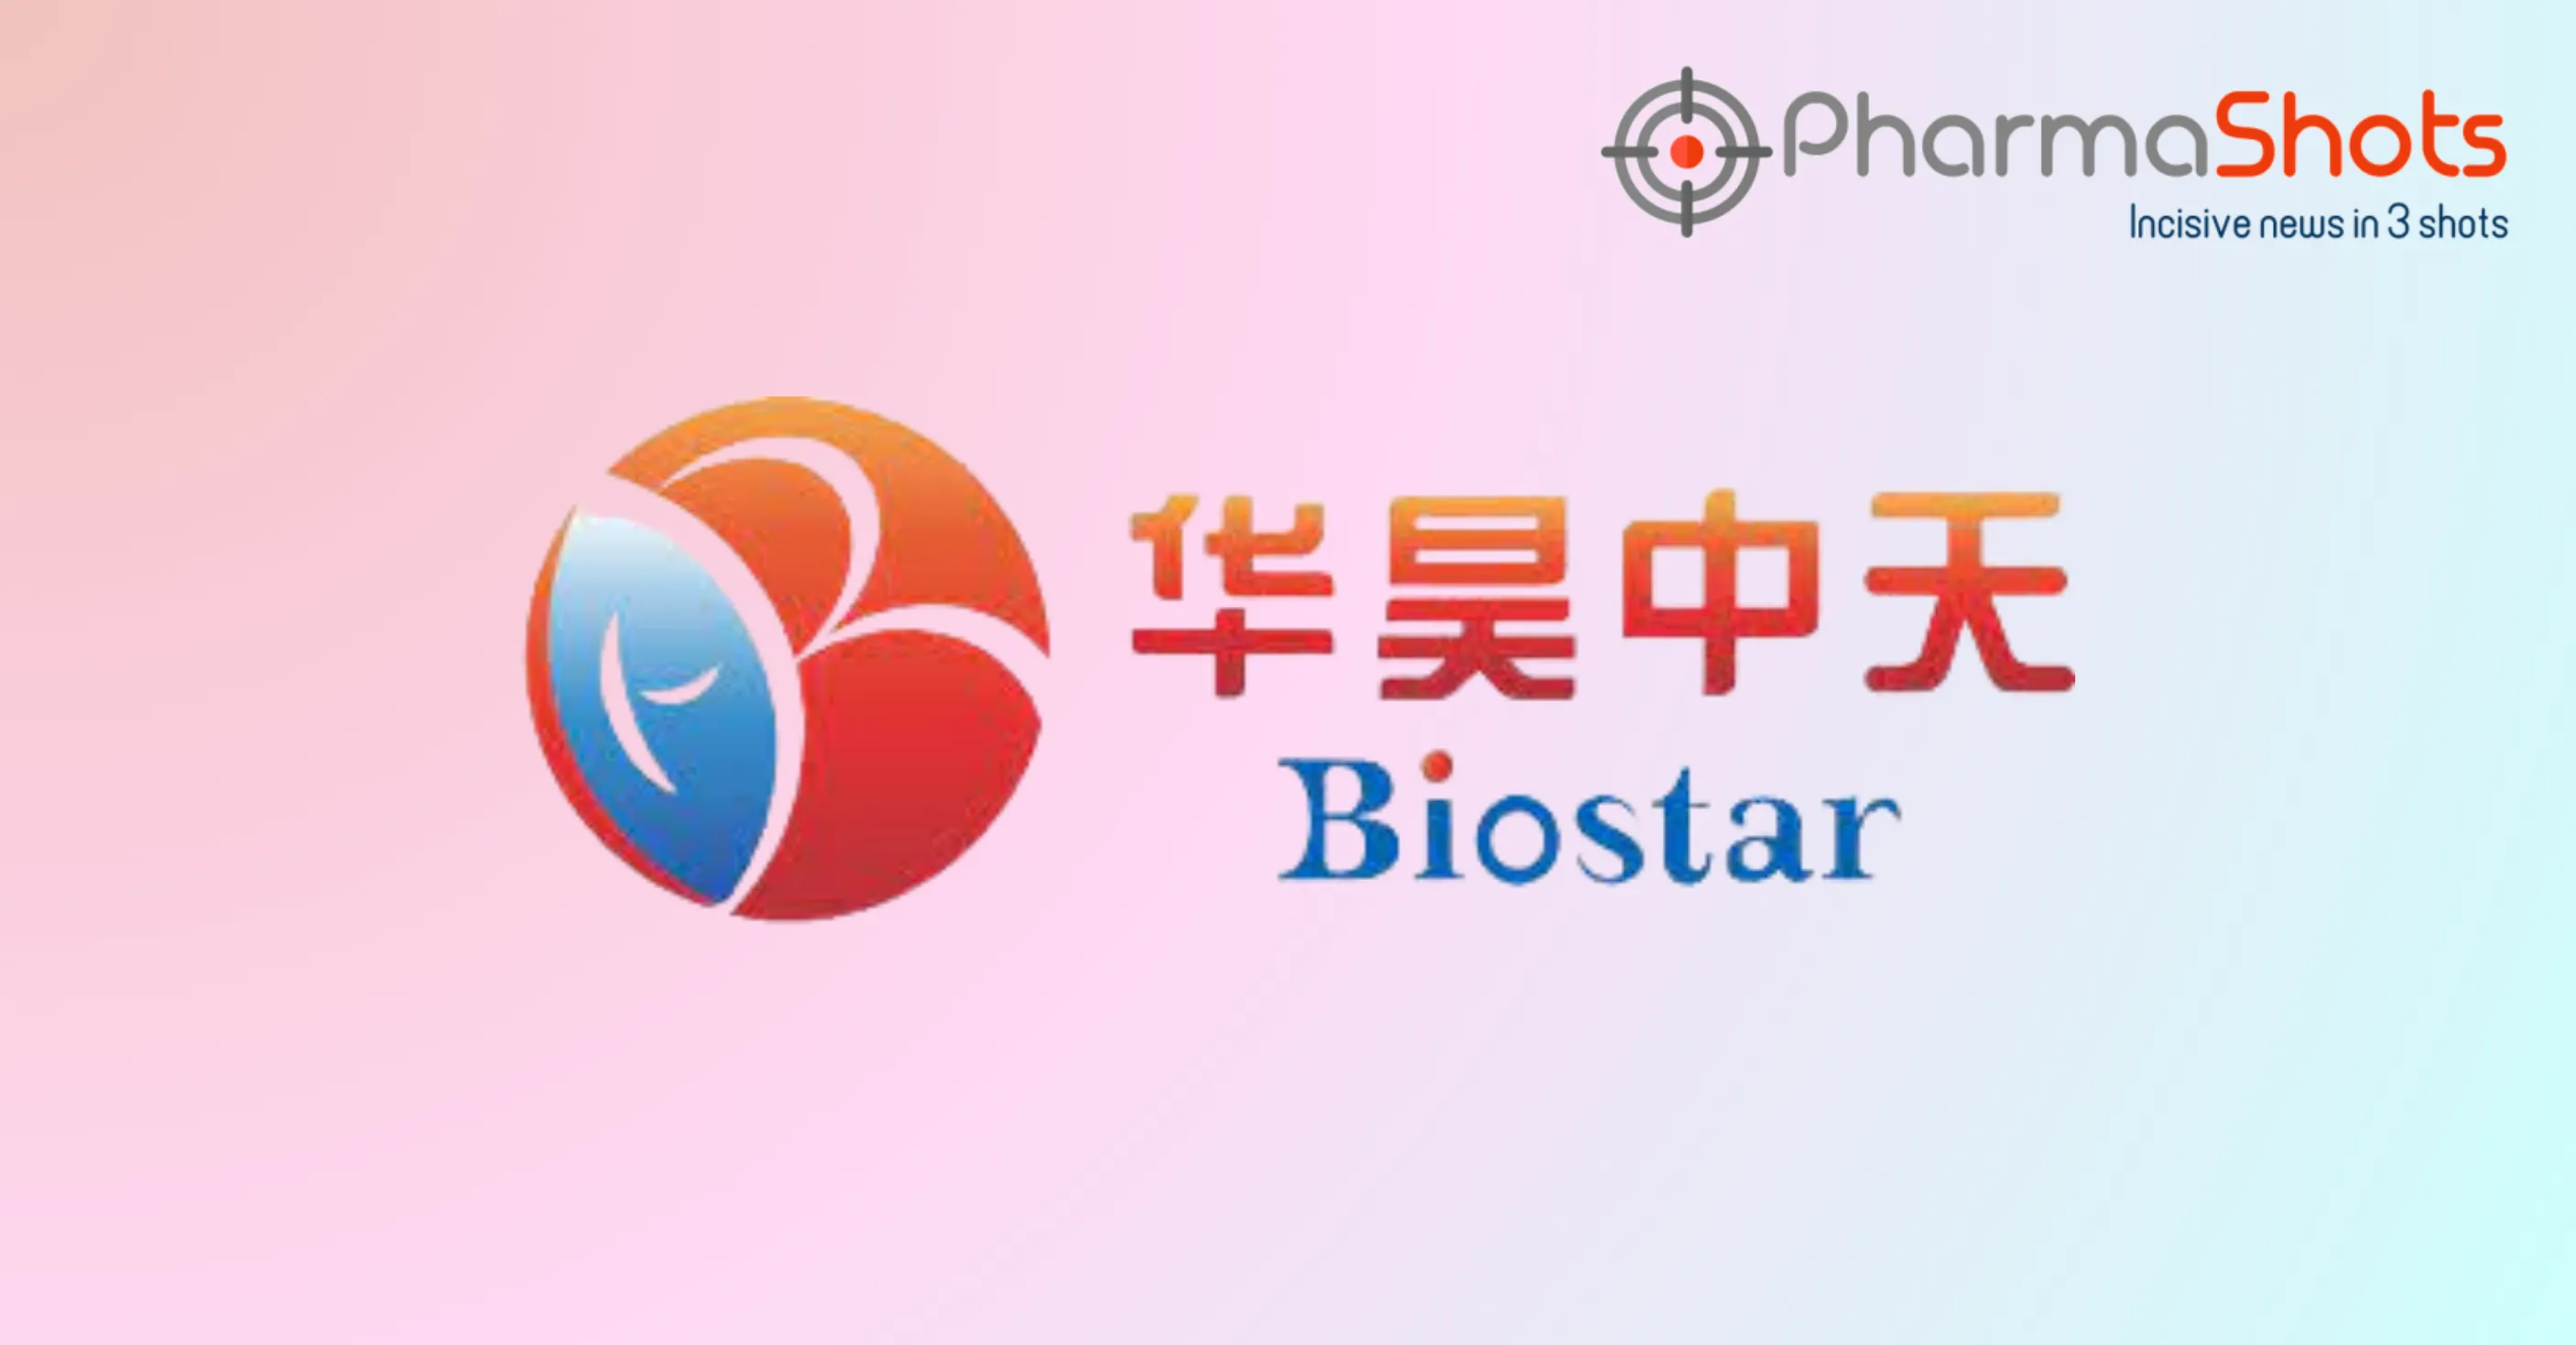 Biostar Pharma’s Utidelone Injectable Receives the USFDA’s Orphan Drug Designation for Treating Breast Cancer Brain Metastasis